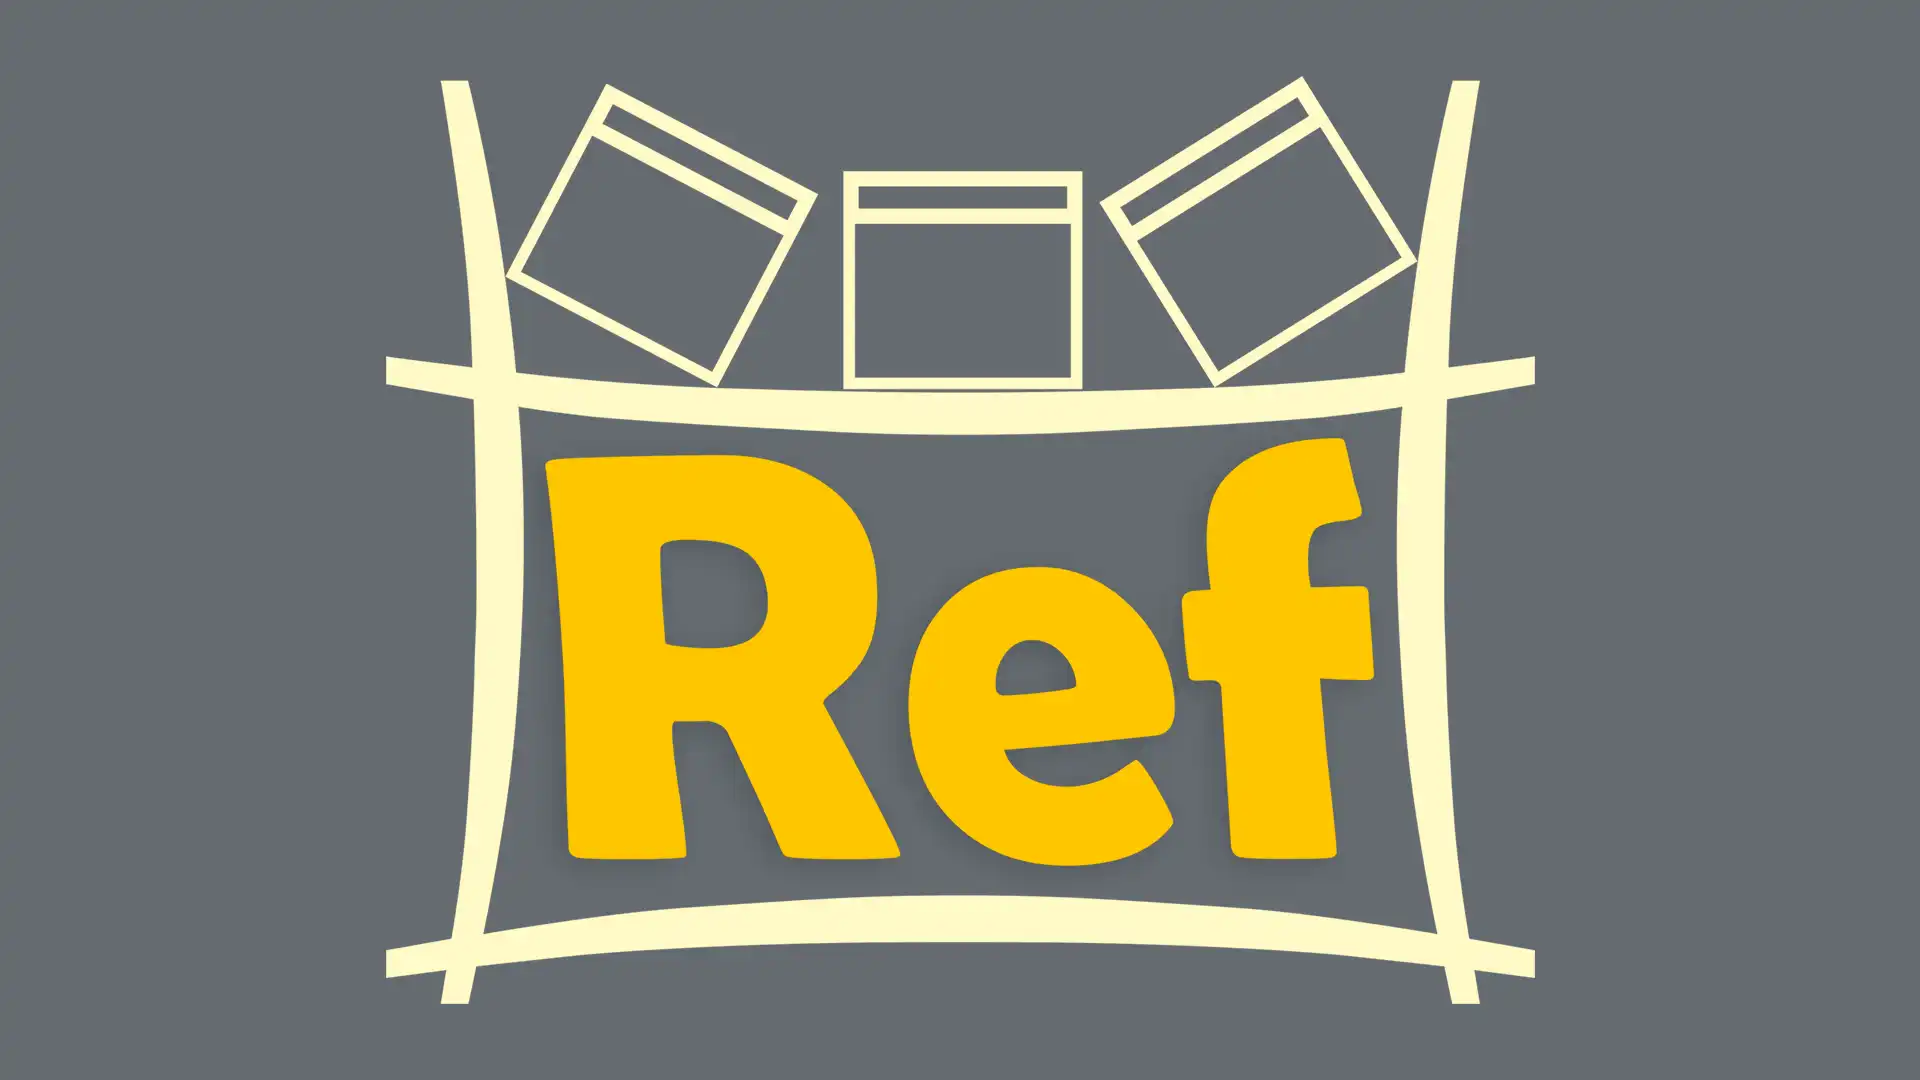 RefShelf reference free image viewer logo.